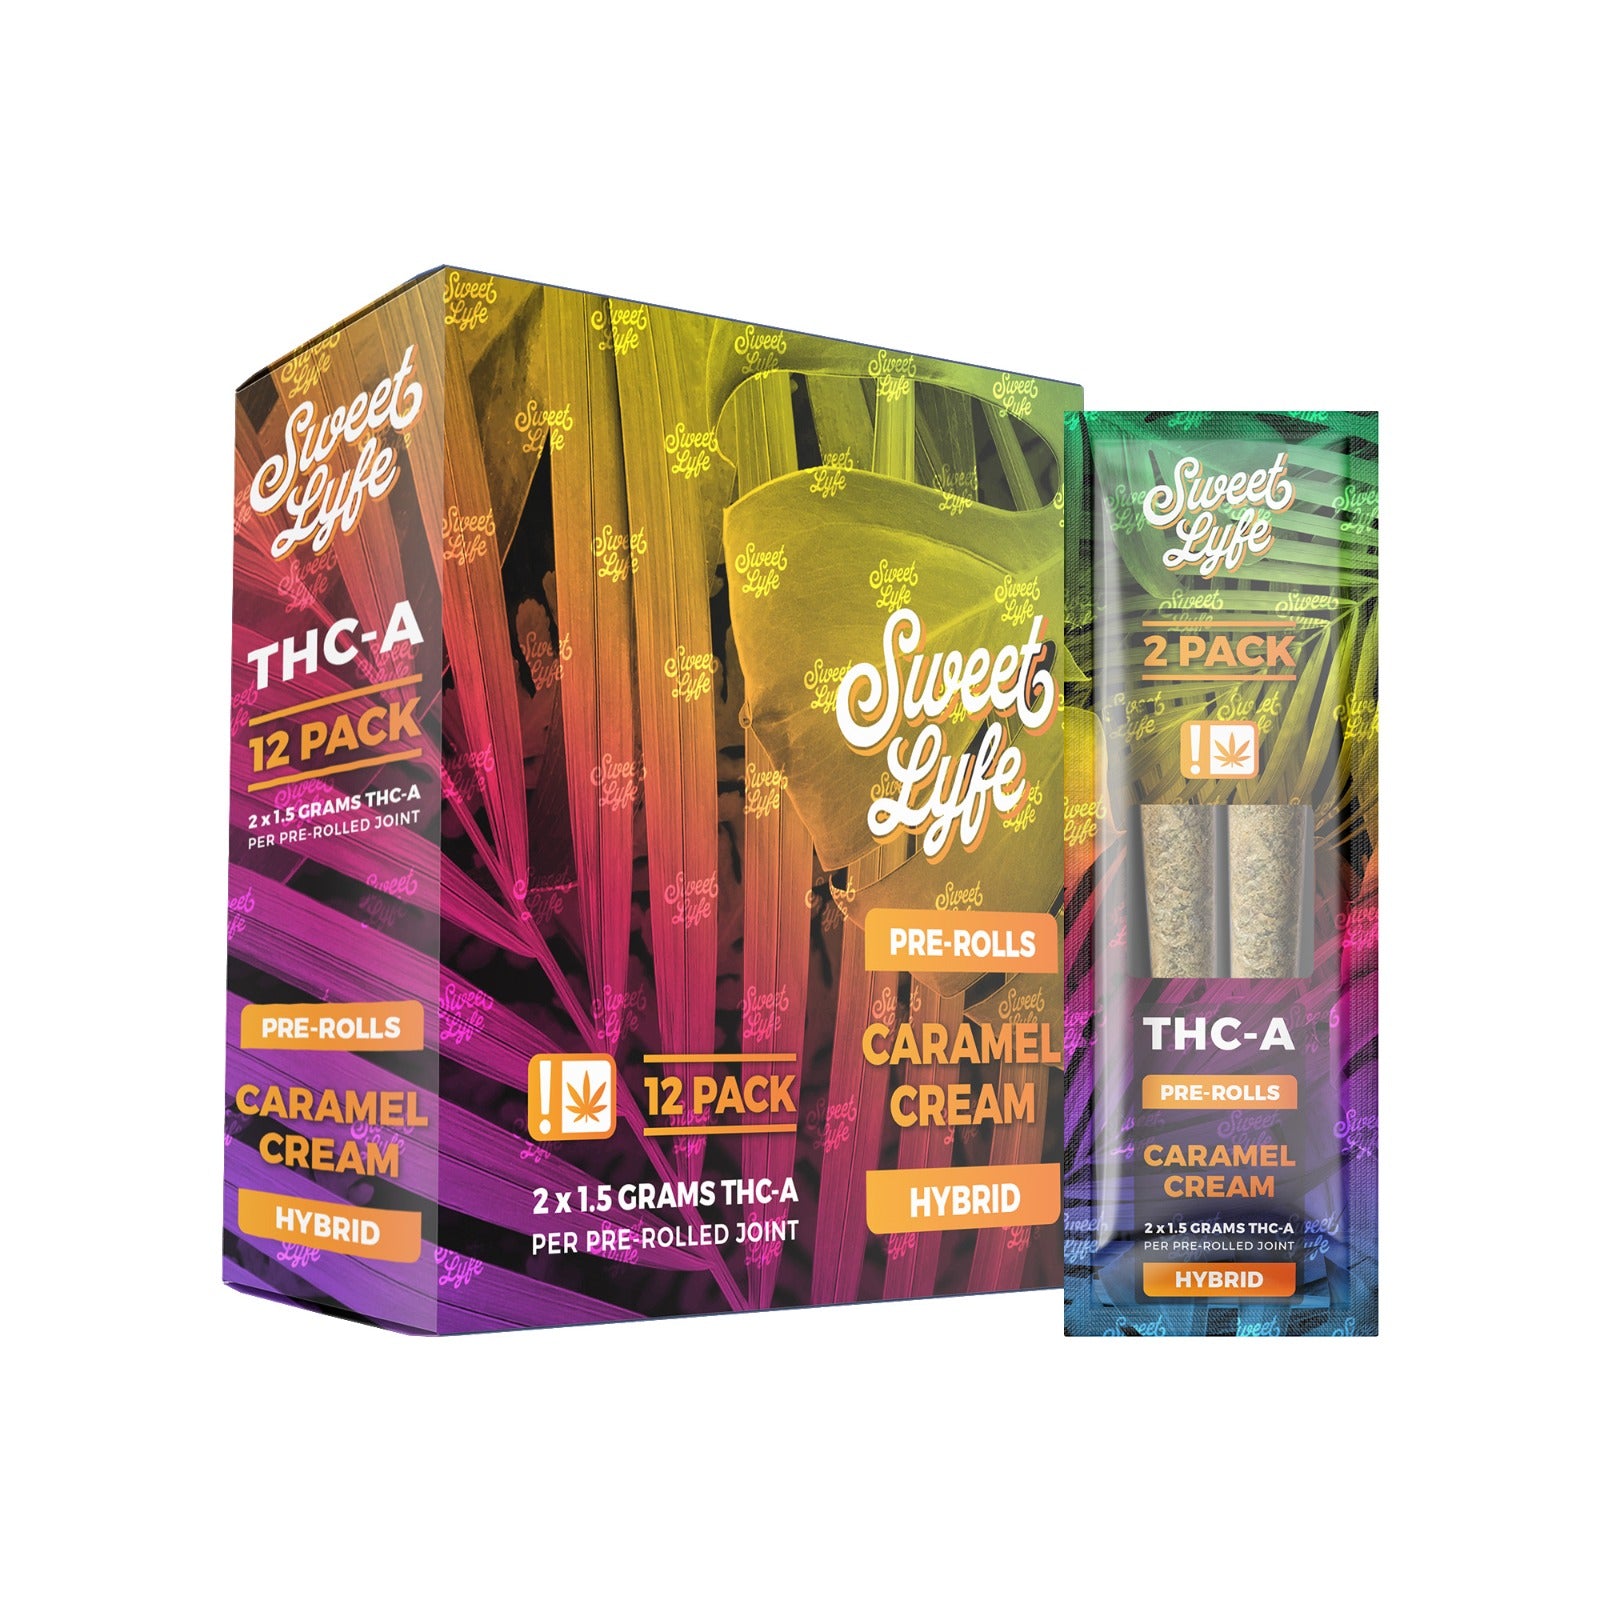 2 Pack Pre-Rolls Joint THC-A|Caramel Cream - Hybrid